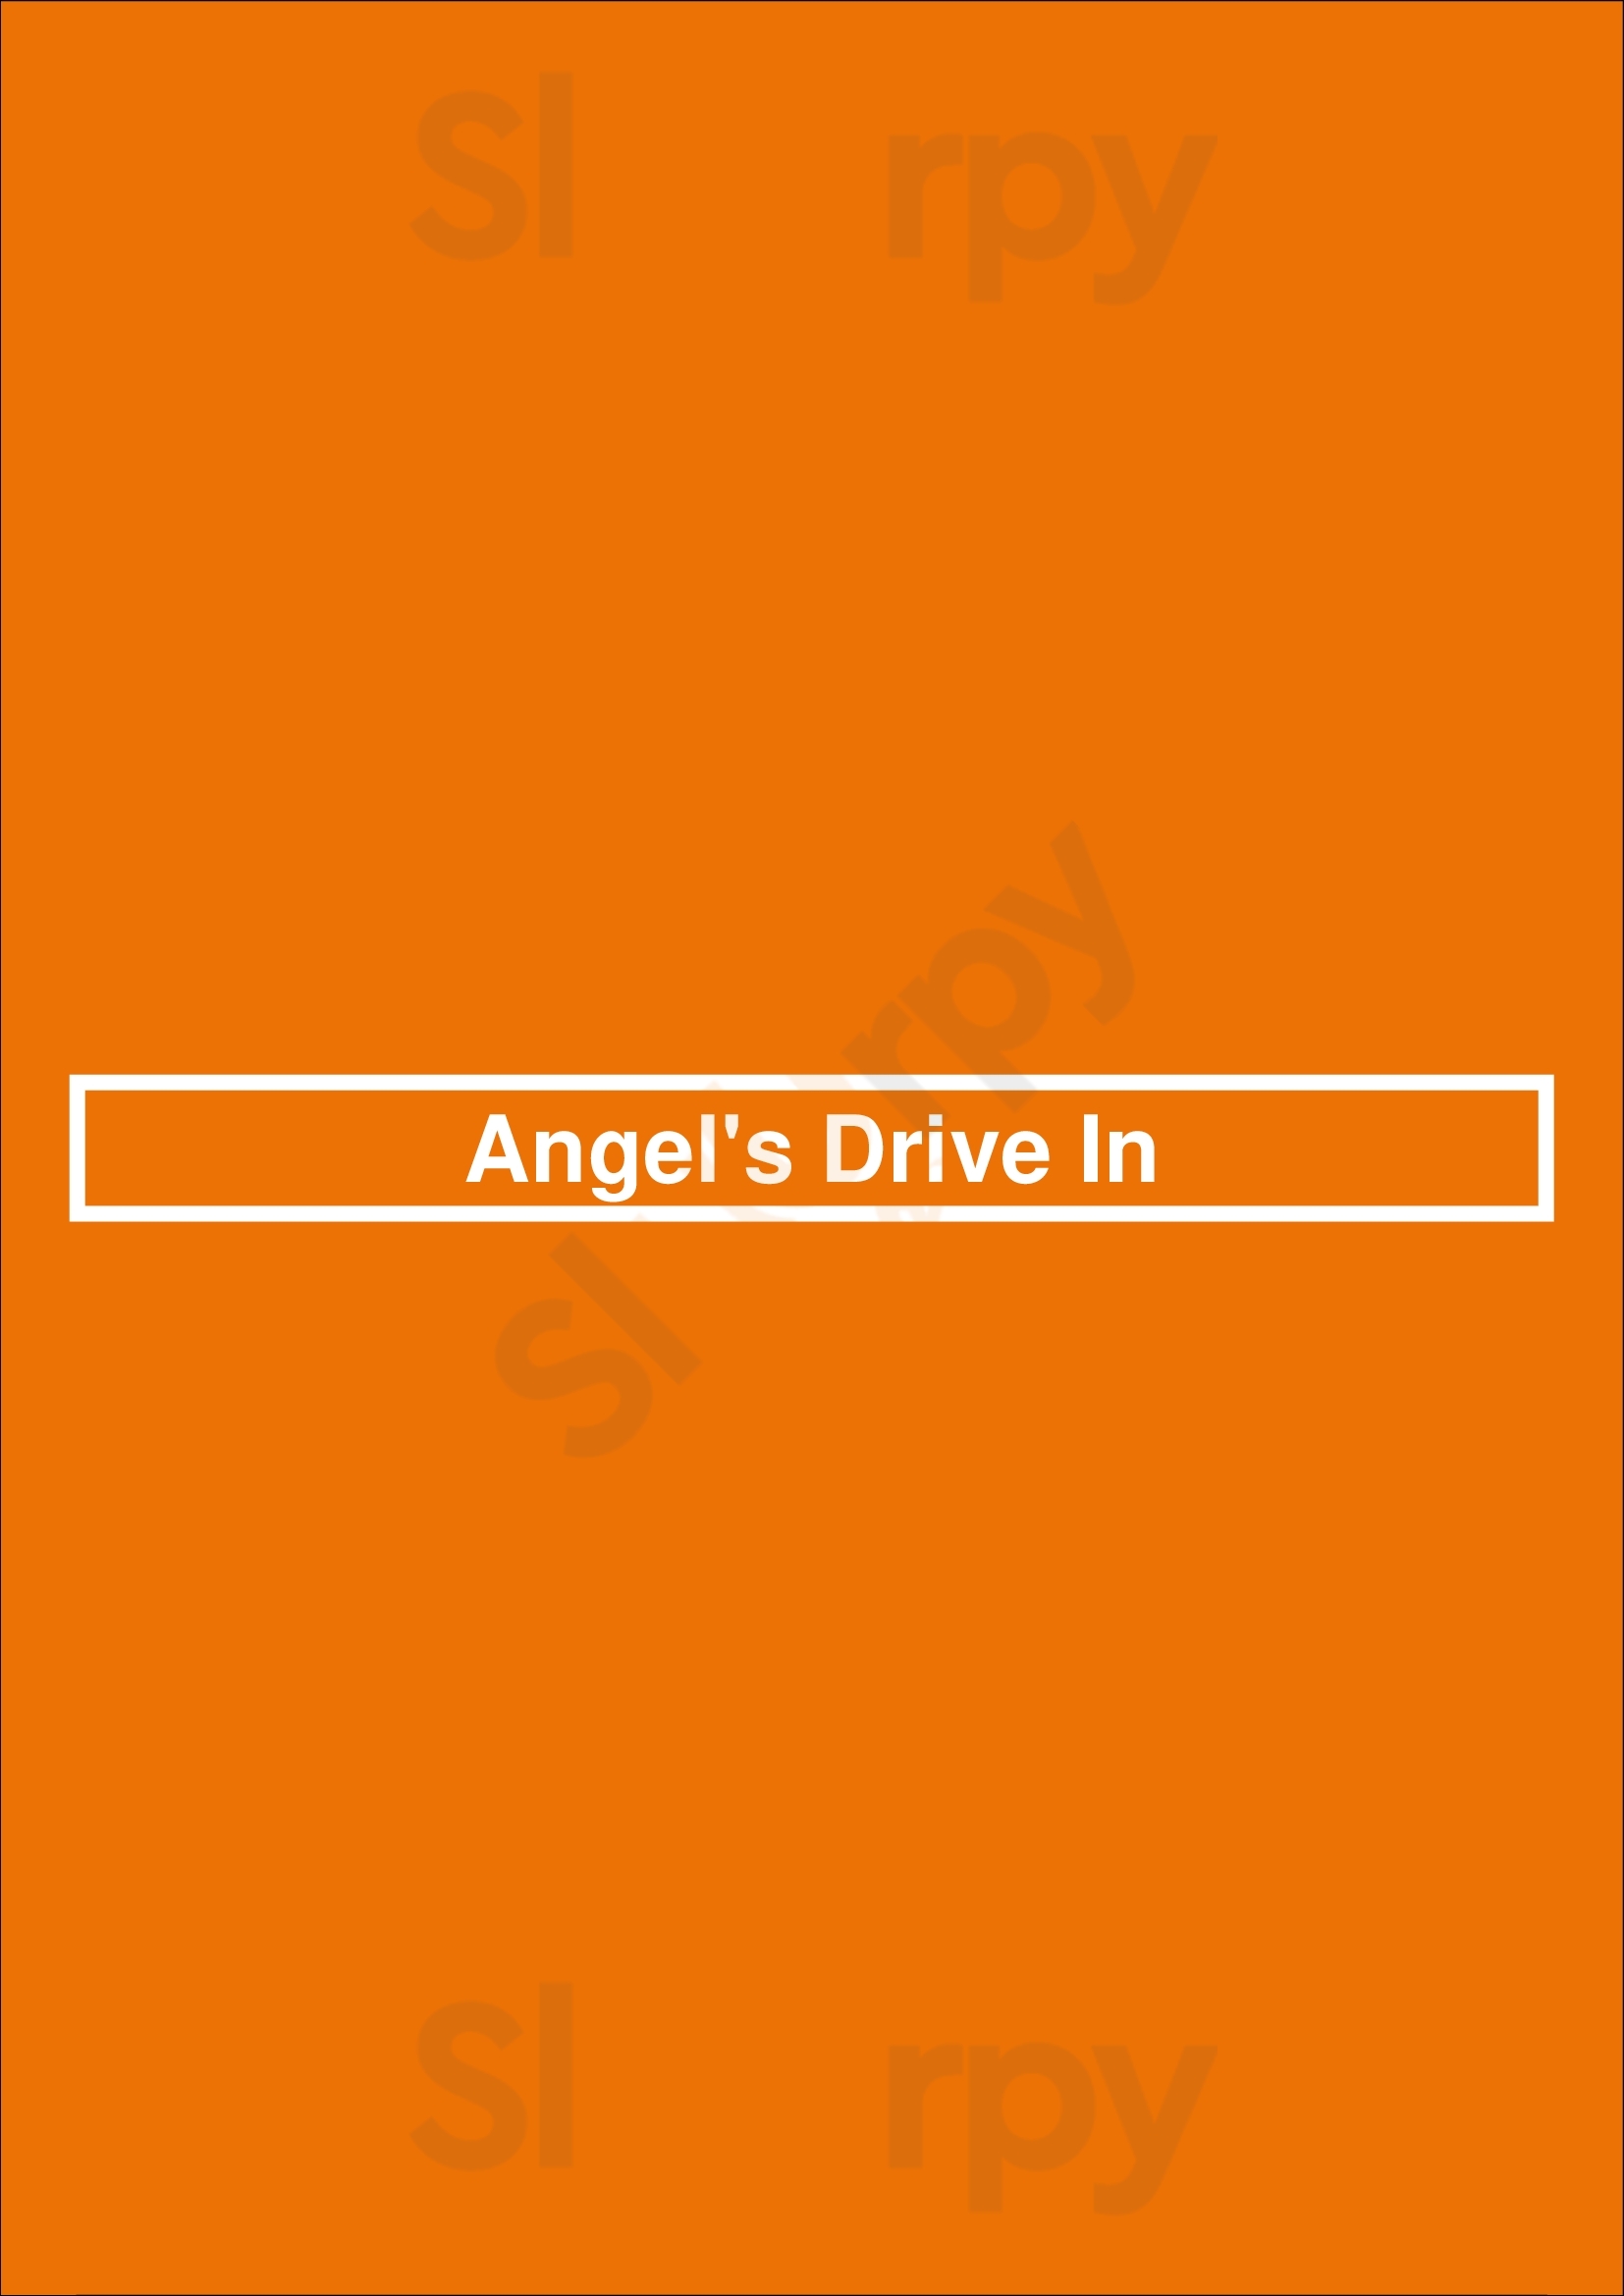 Angel's Drive In Calgary Menu - 1